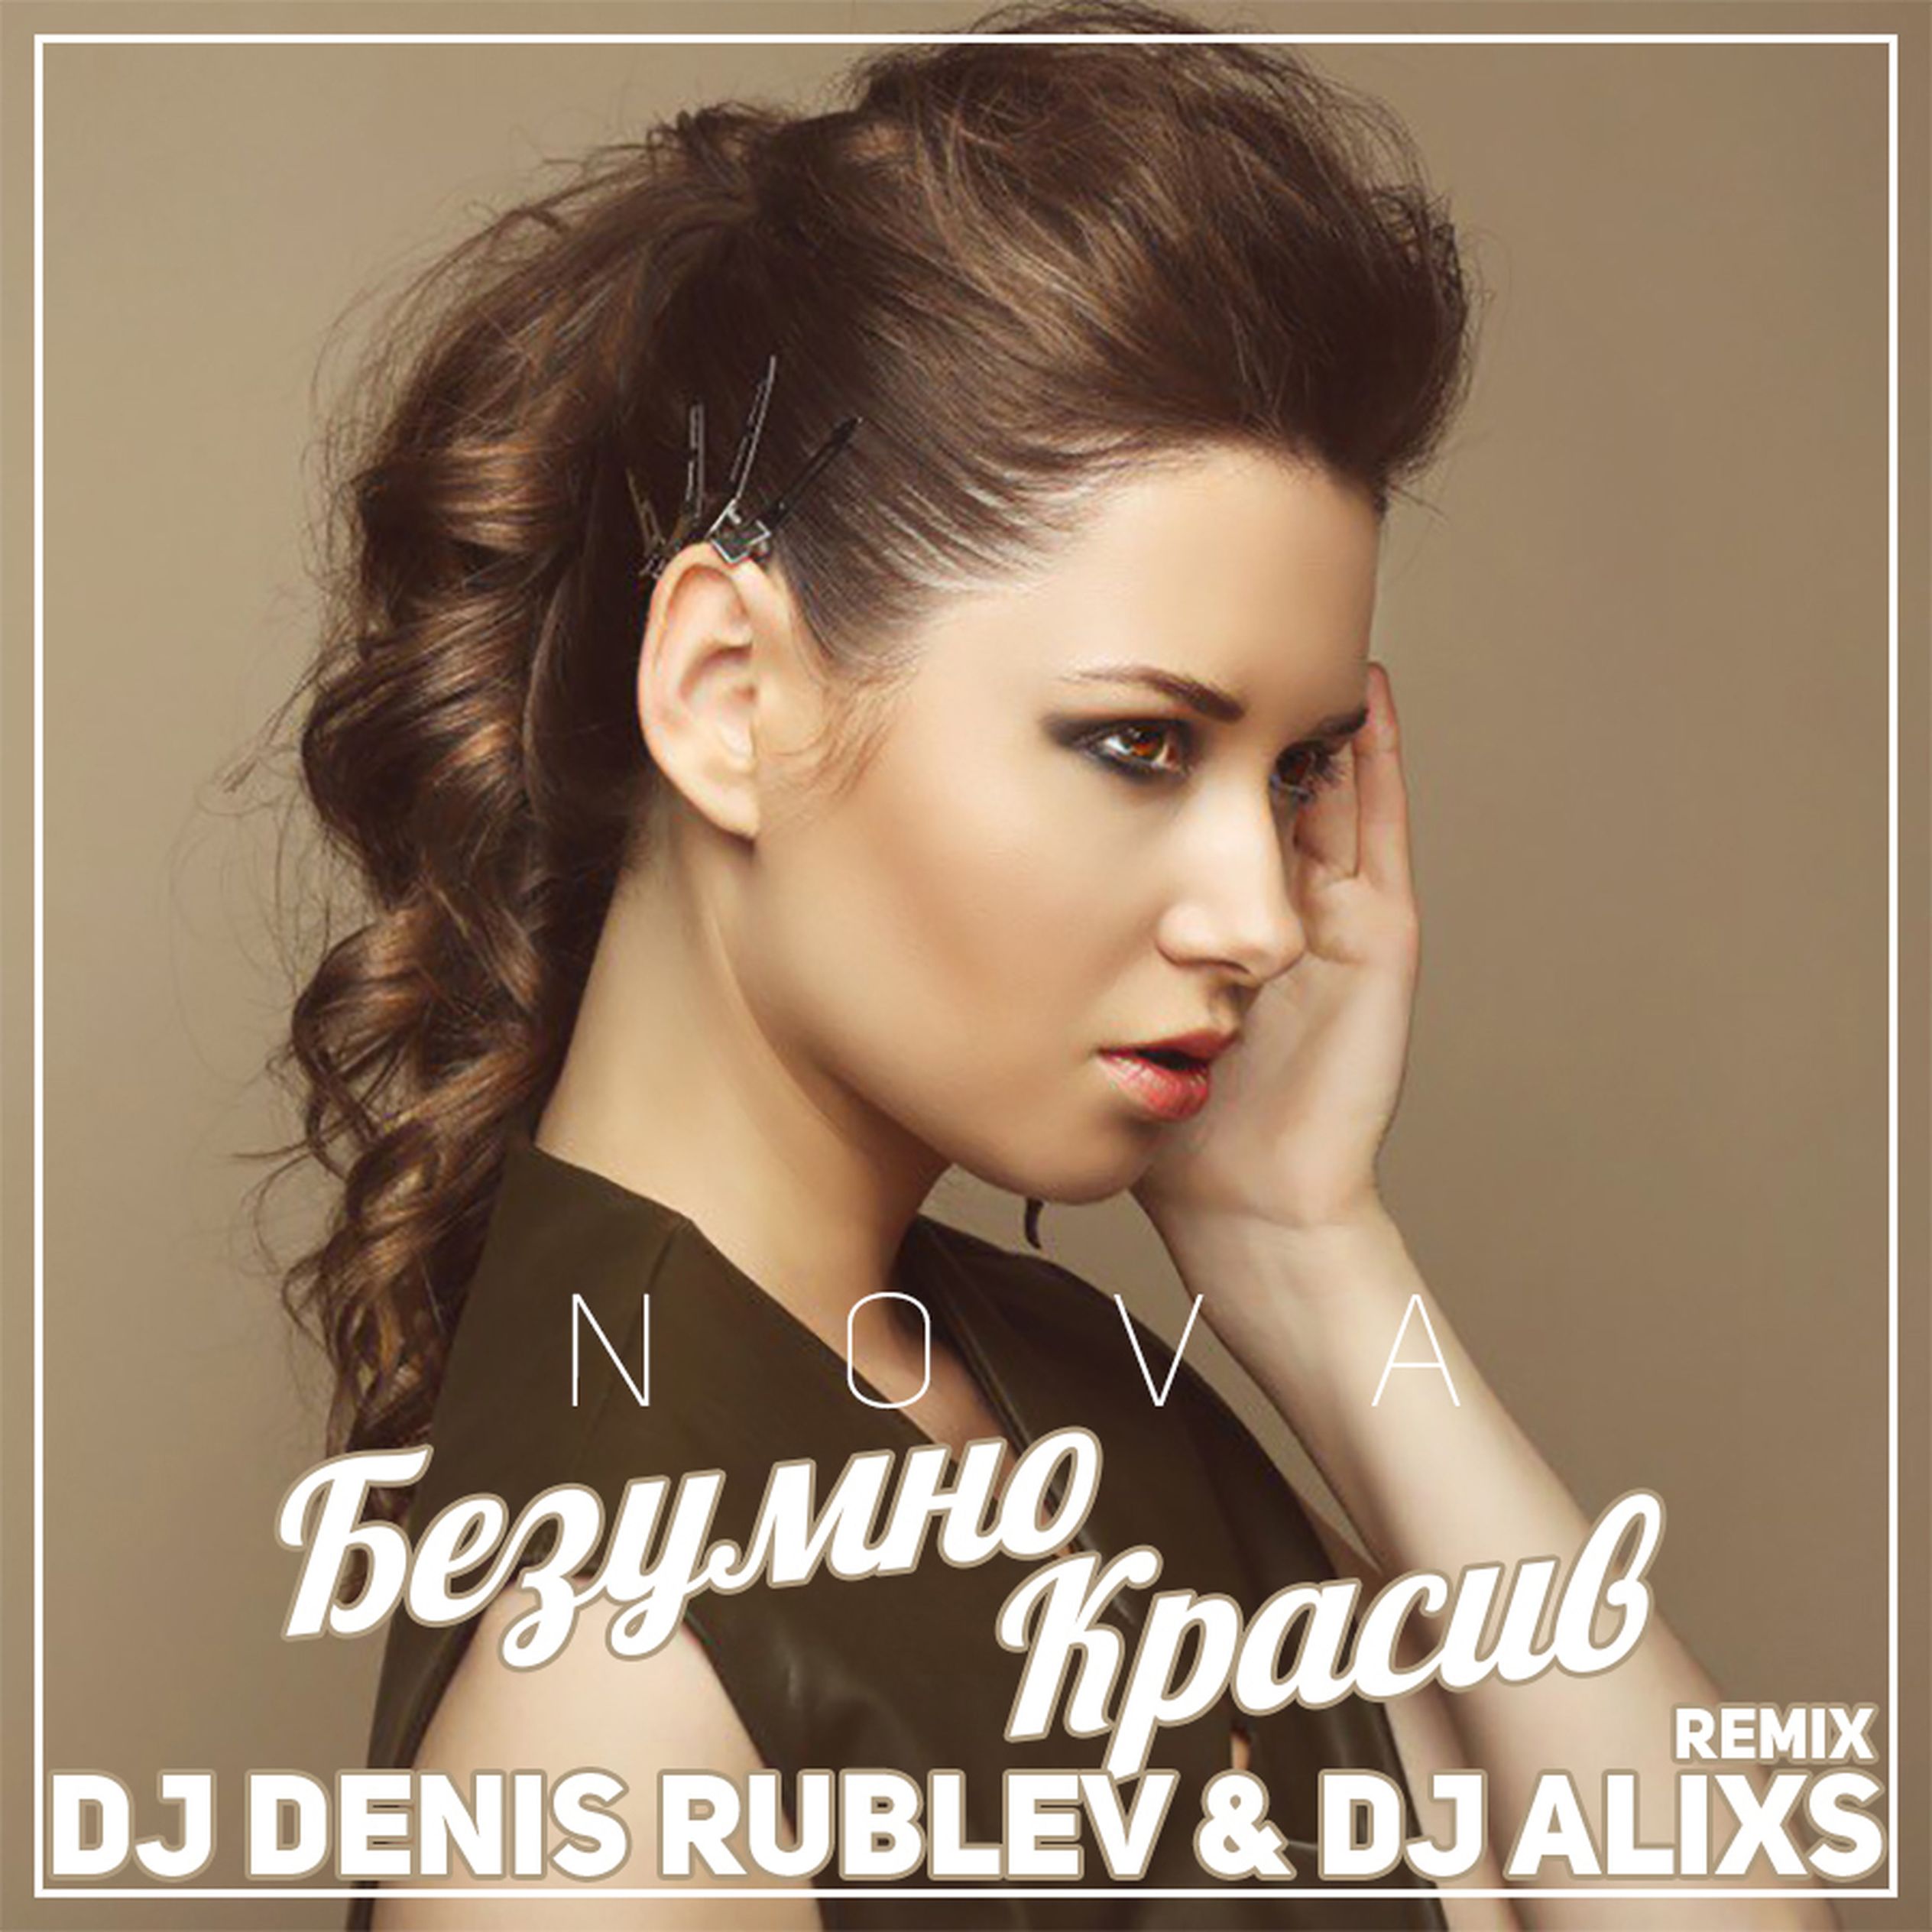 Nova-безумно красив. DJ Denis Rublev. Denis first Remix. DJ Denis Rublev - malchik moy Remix. Песни новые популярные ремикс